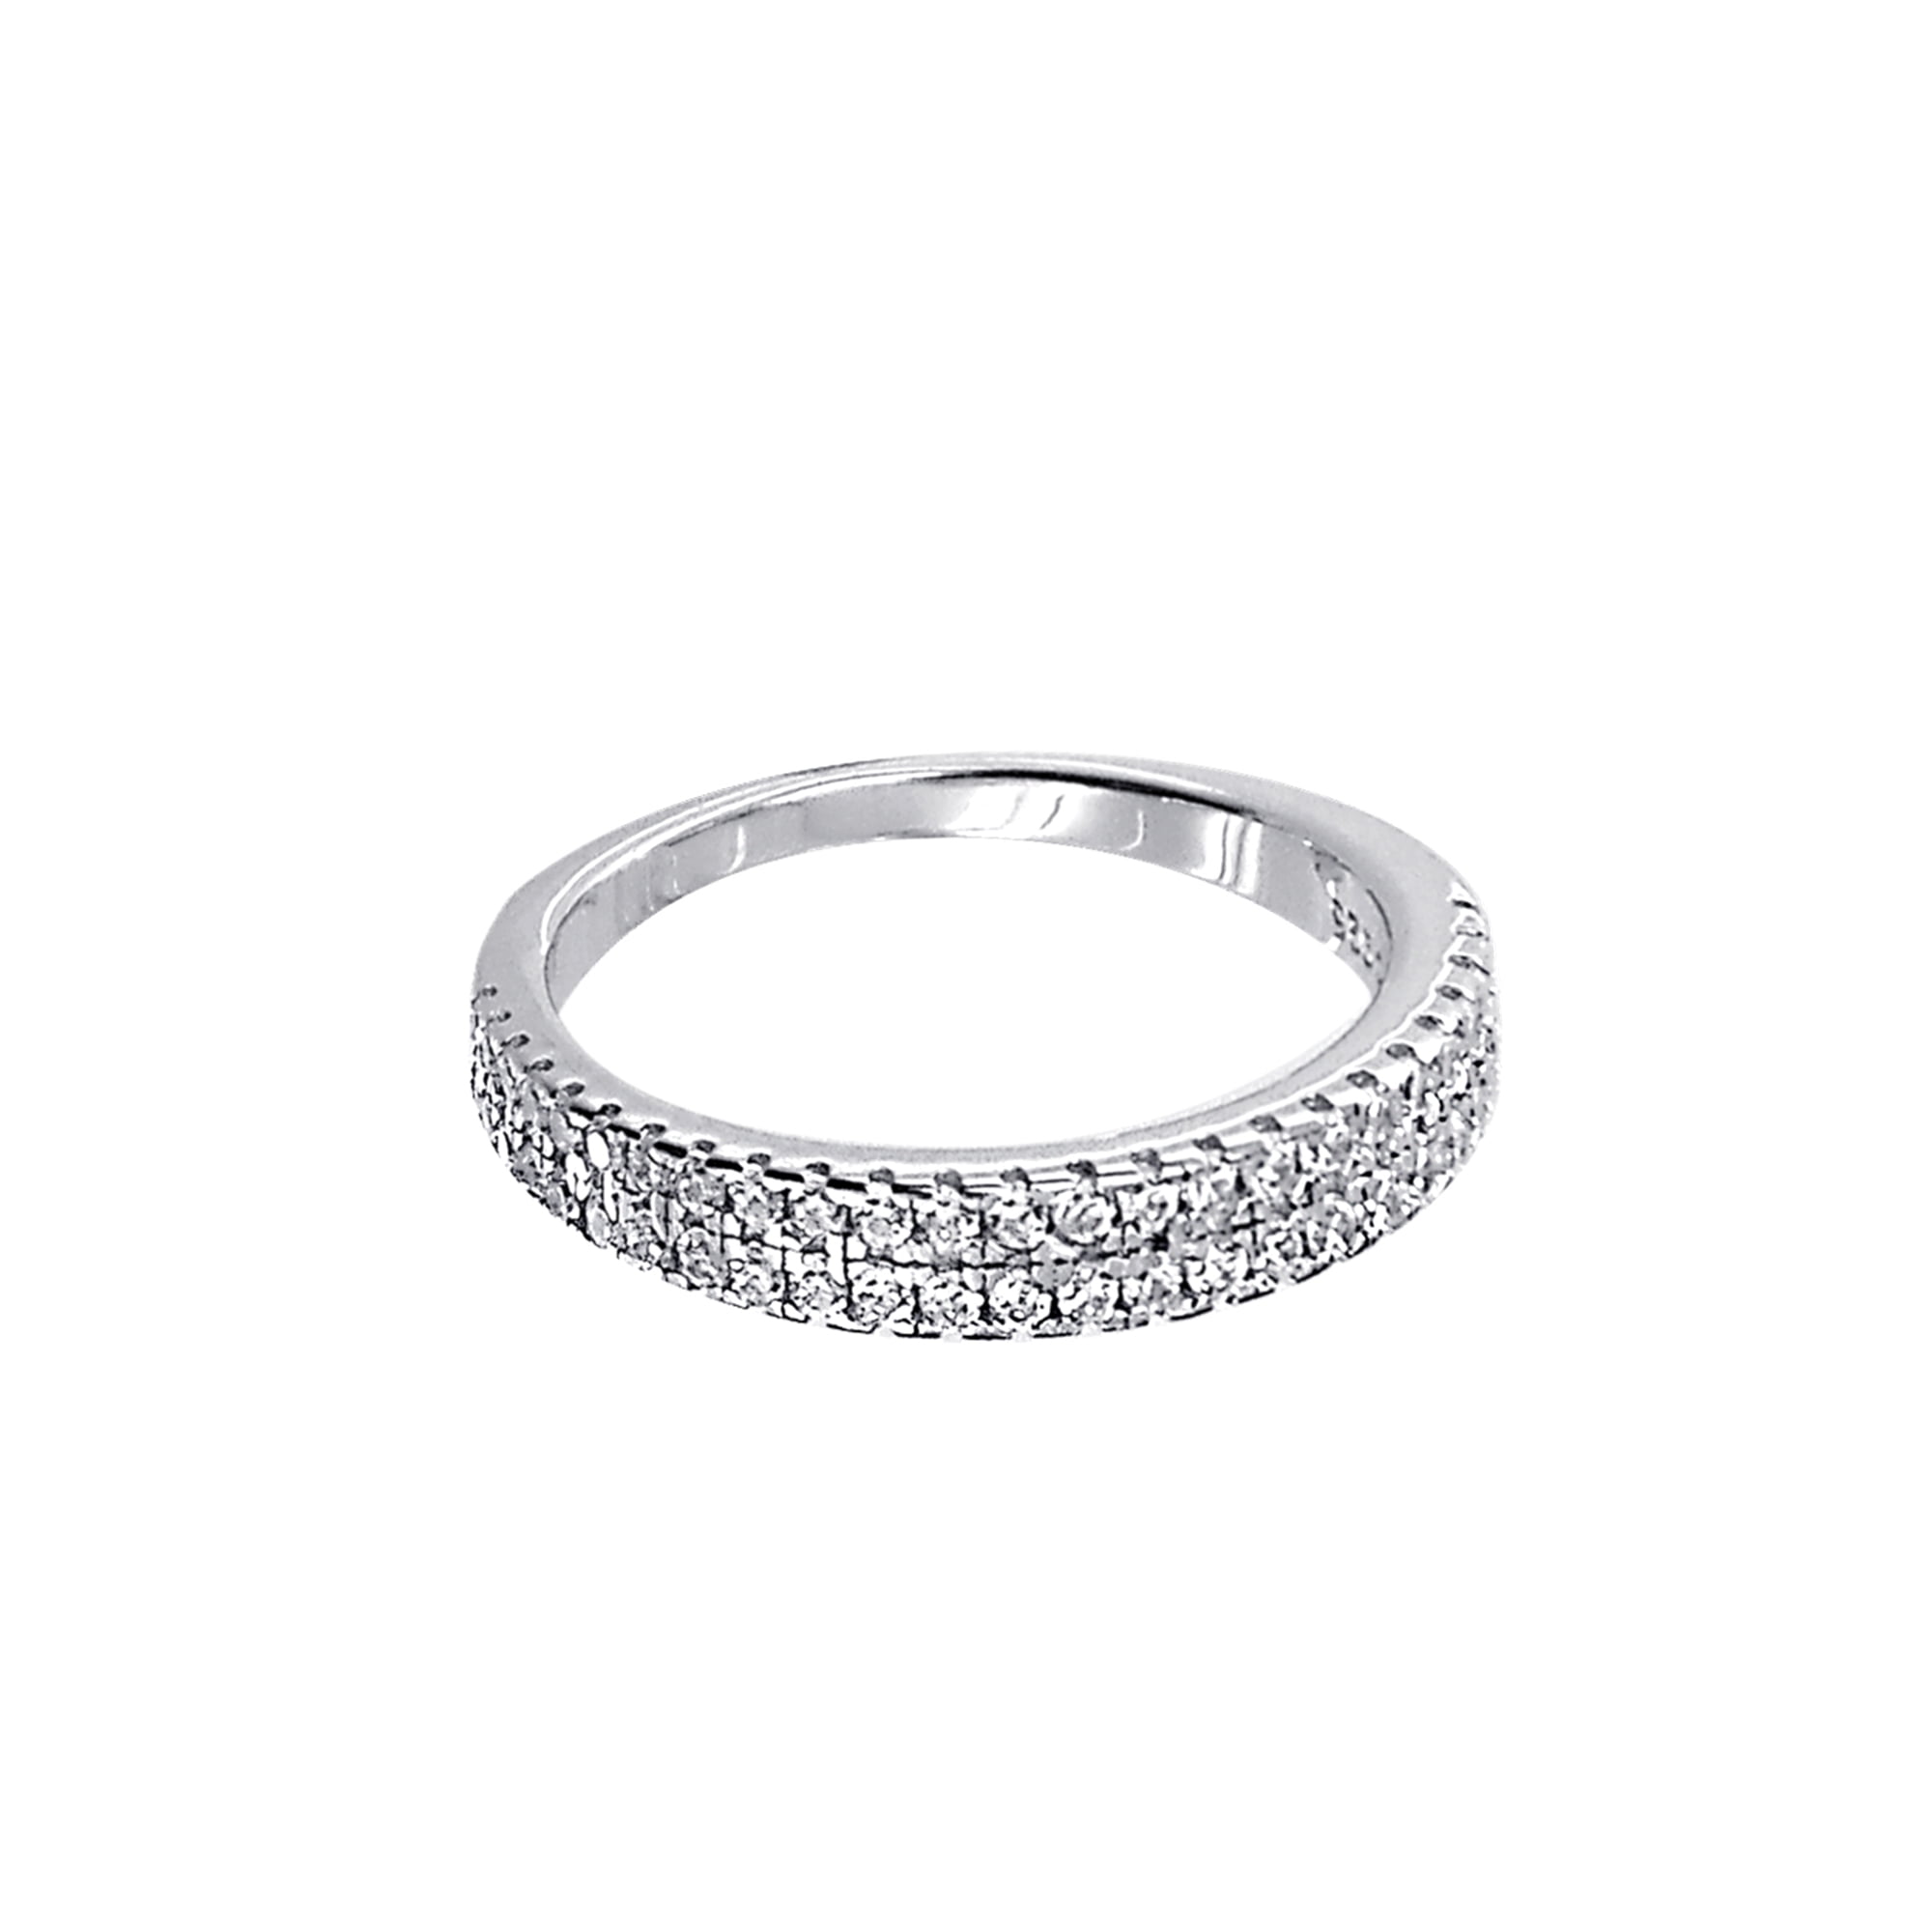 Details about   .925 Sterling Silver CZ Leaf Ring Size 7 MSRP $74 